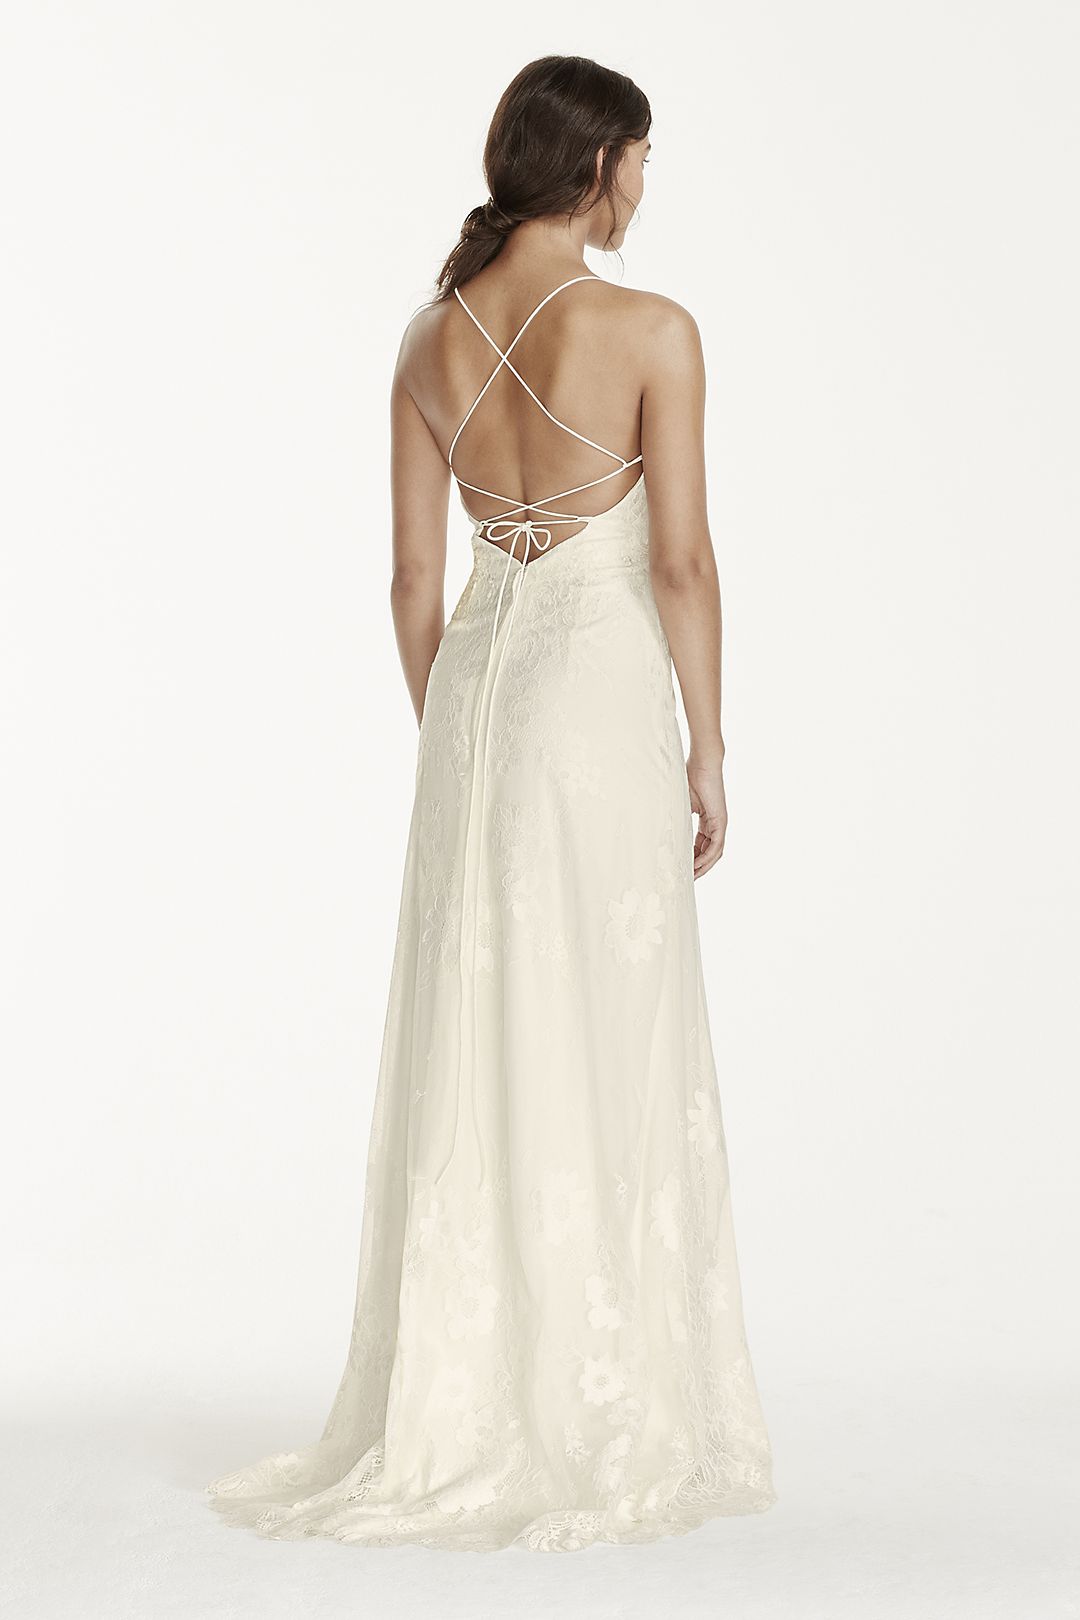 Lace Sheath Dress with Low Crisscross Back Image 4